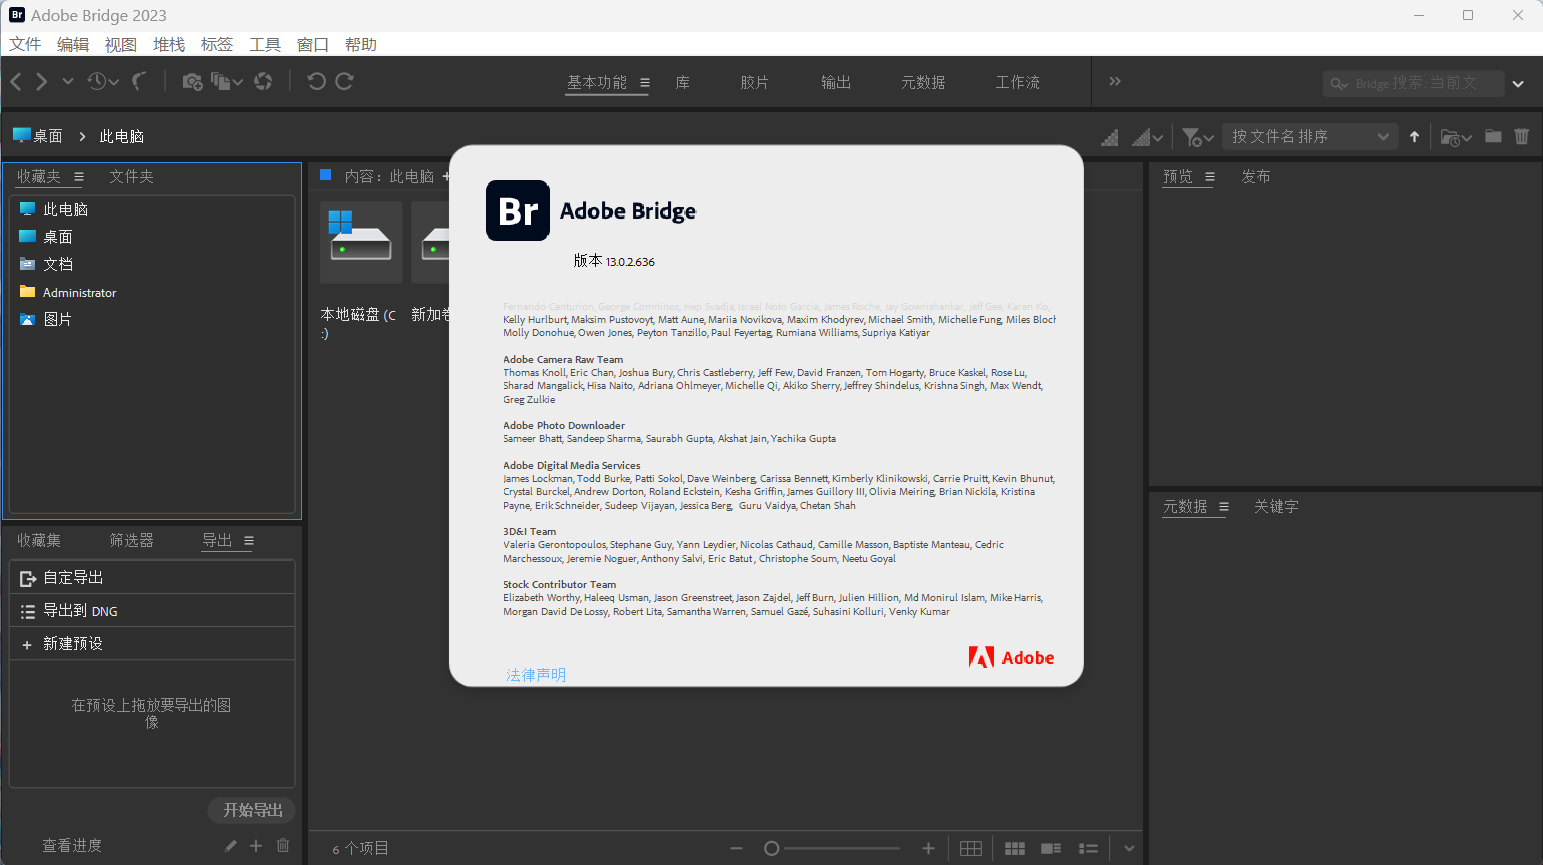 instal the new for ios Adobe Bridge 2023 v13.0.4.755